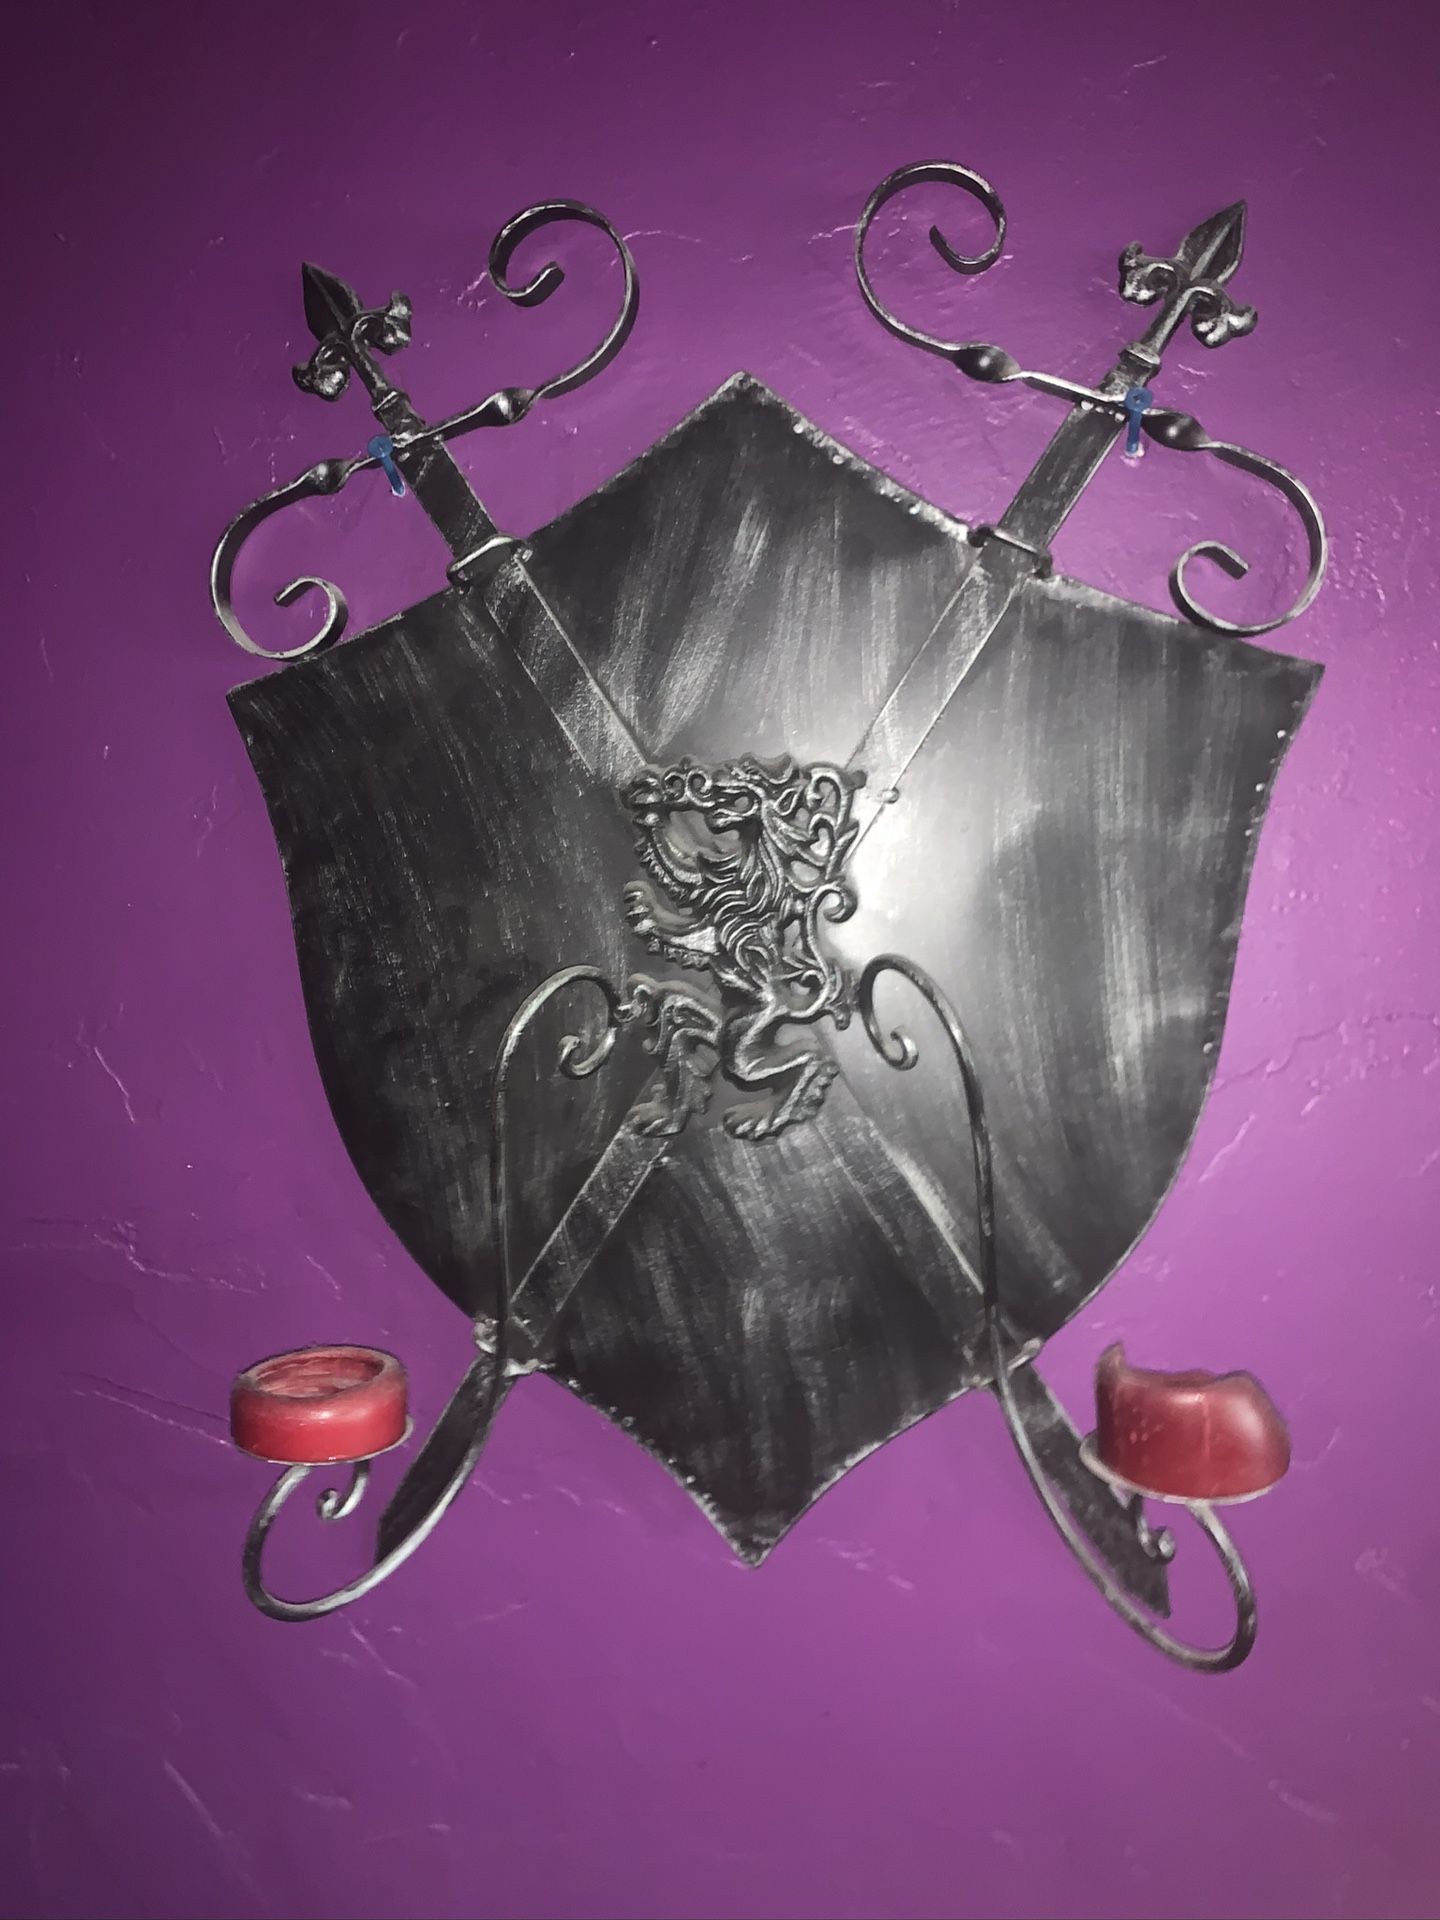 Mid evil shield decor/ candle holder